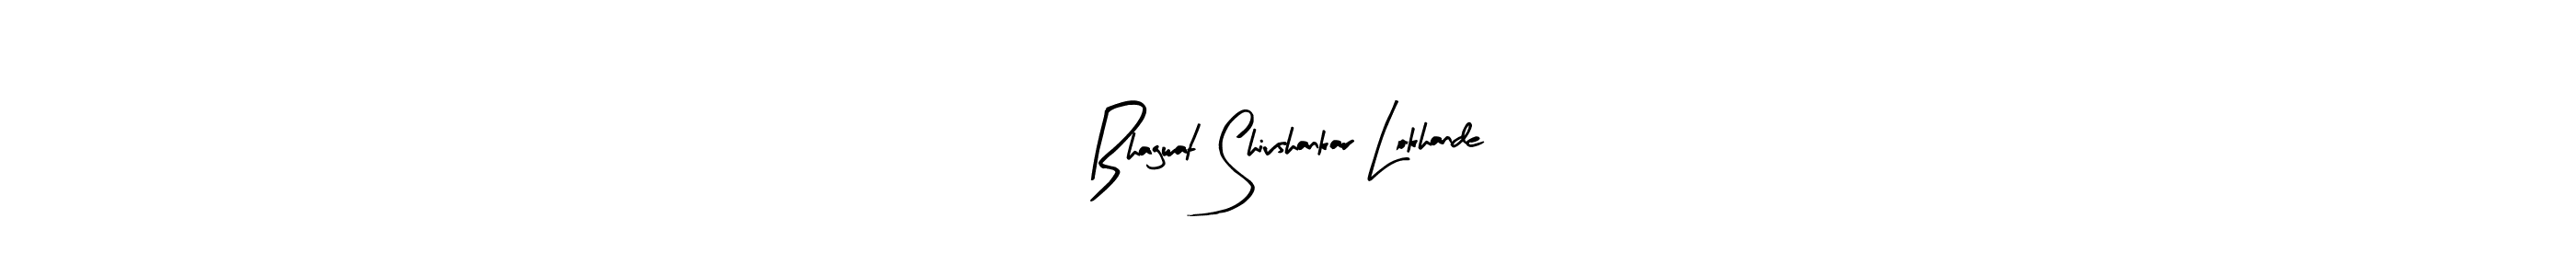 Bhagwat Shivshankar Lokhande stylish signature style. Best Handwritten Sign (Arty Signature) for my name. Handwritten Signature Collection Ideas for my name Bhagwat Shivshankar Lokhande. Bhagwat Shivshankar Lokhande signature style 8 images and pictures png